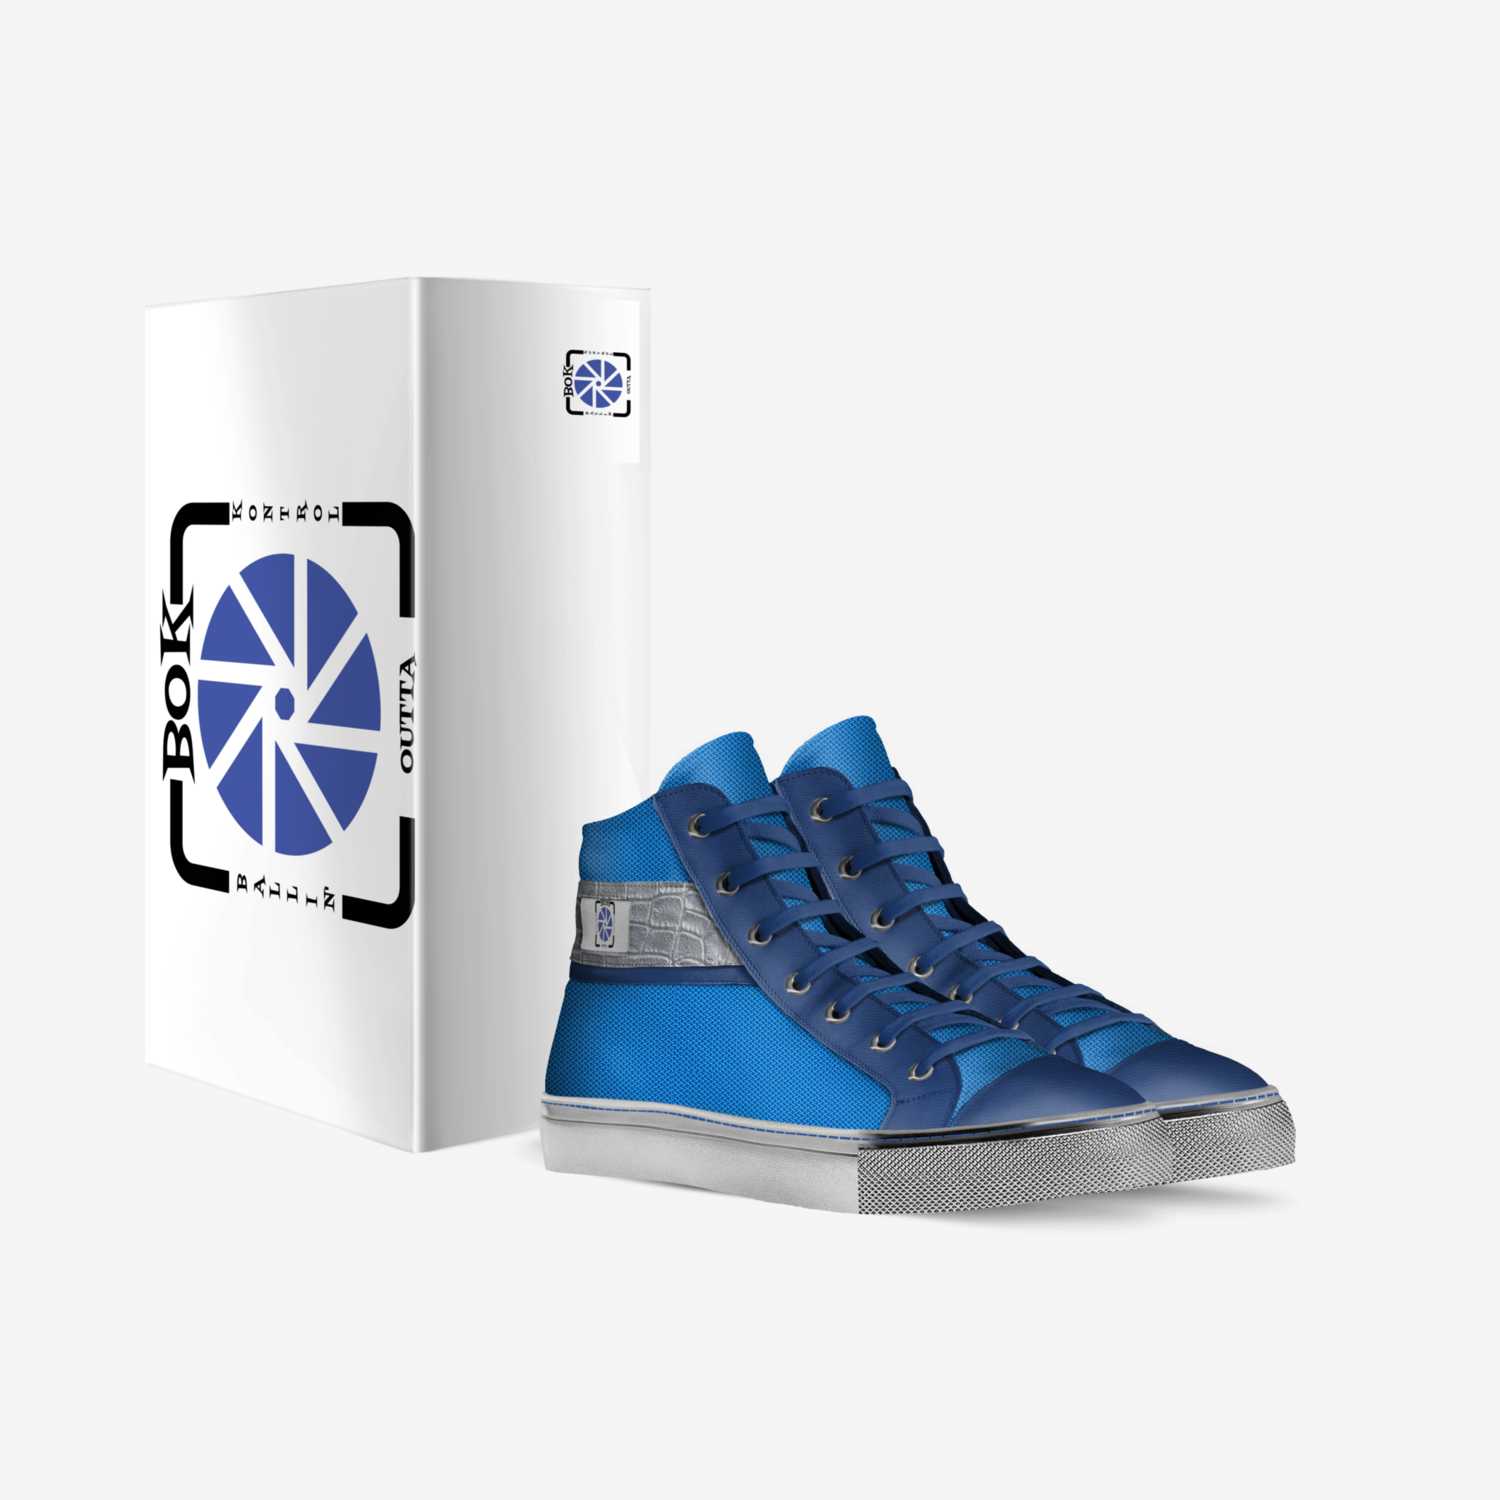 BOK- THE COJO custom made in Italy shoes by Garett Harris | Box view